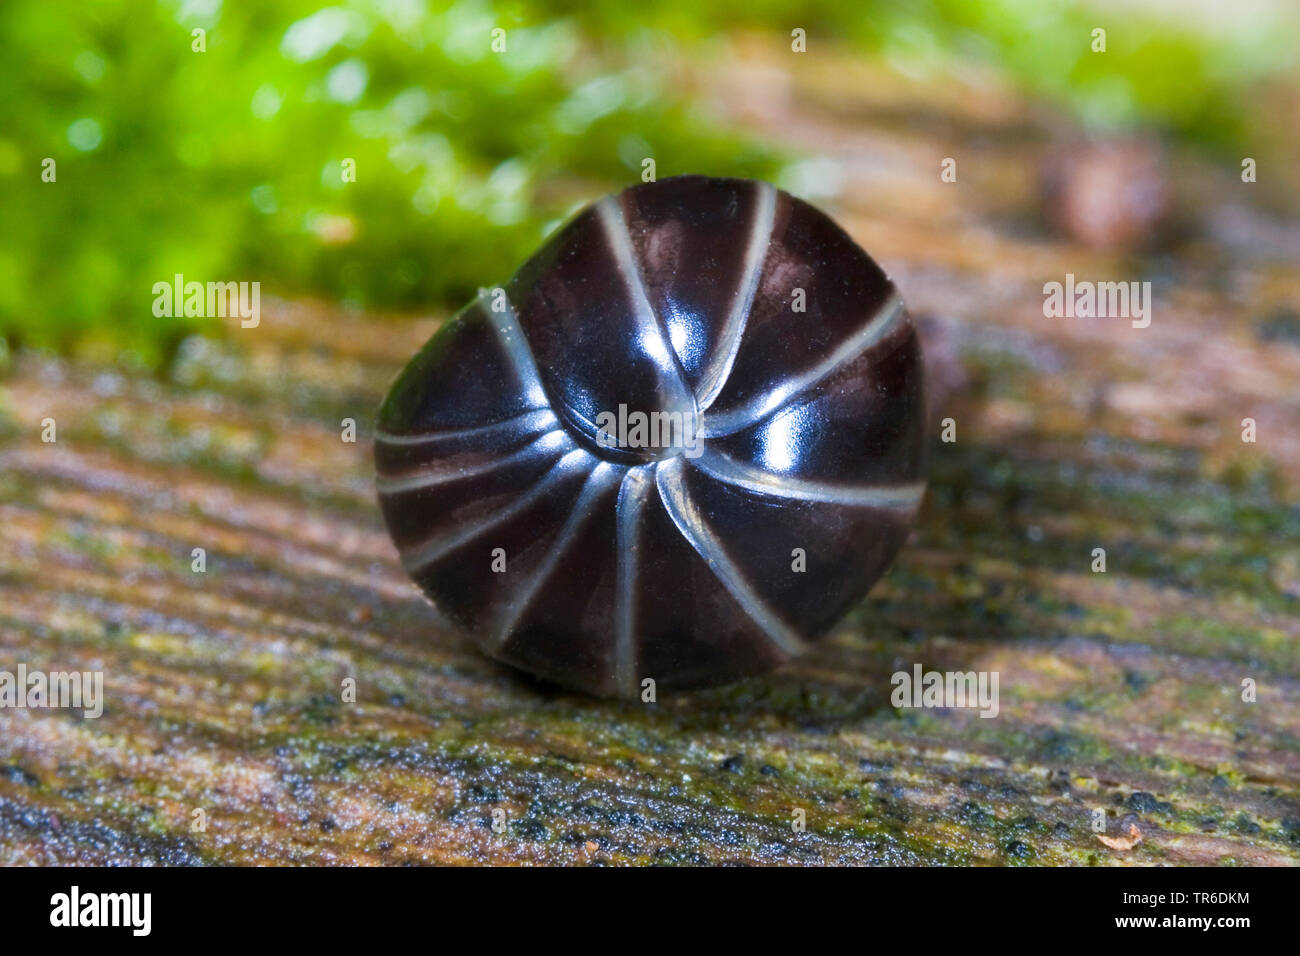 pill millipede (Glomeris marginata), on wood, rolled up, Germany Stock Photo